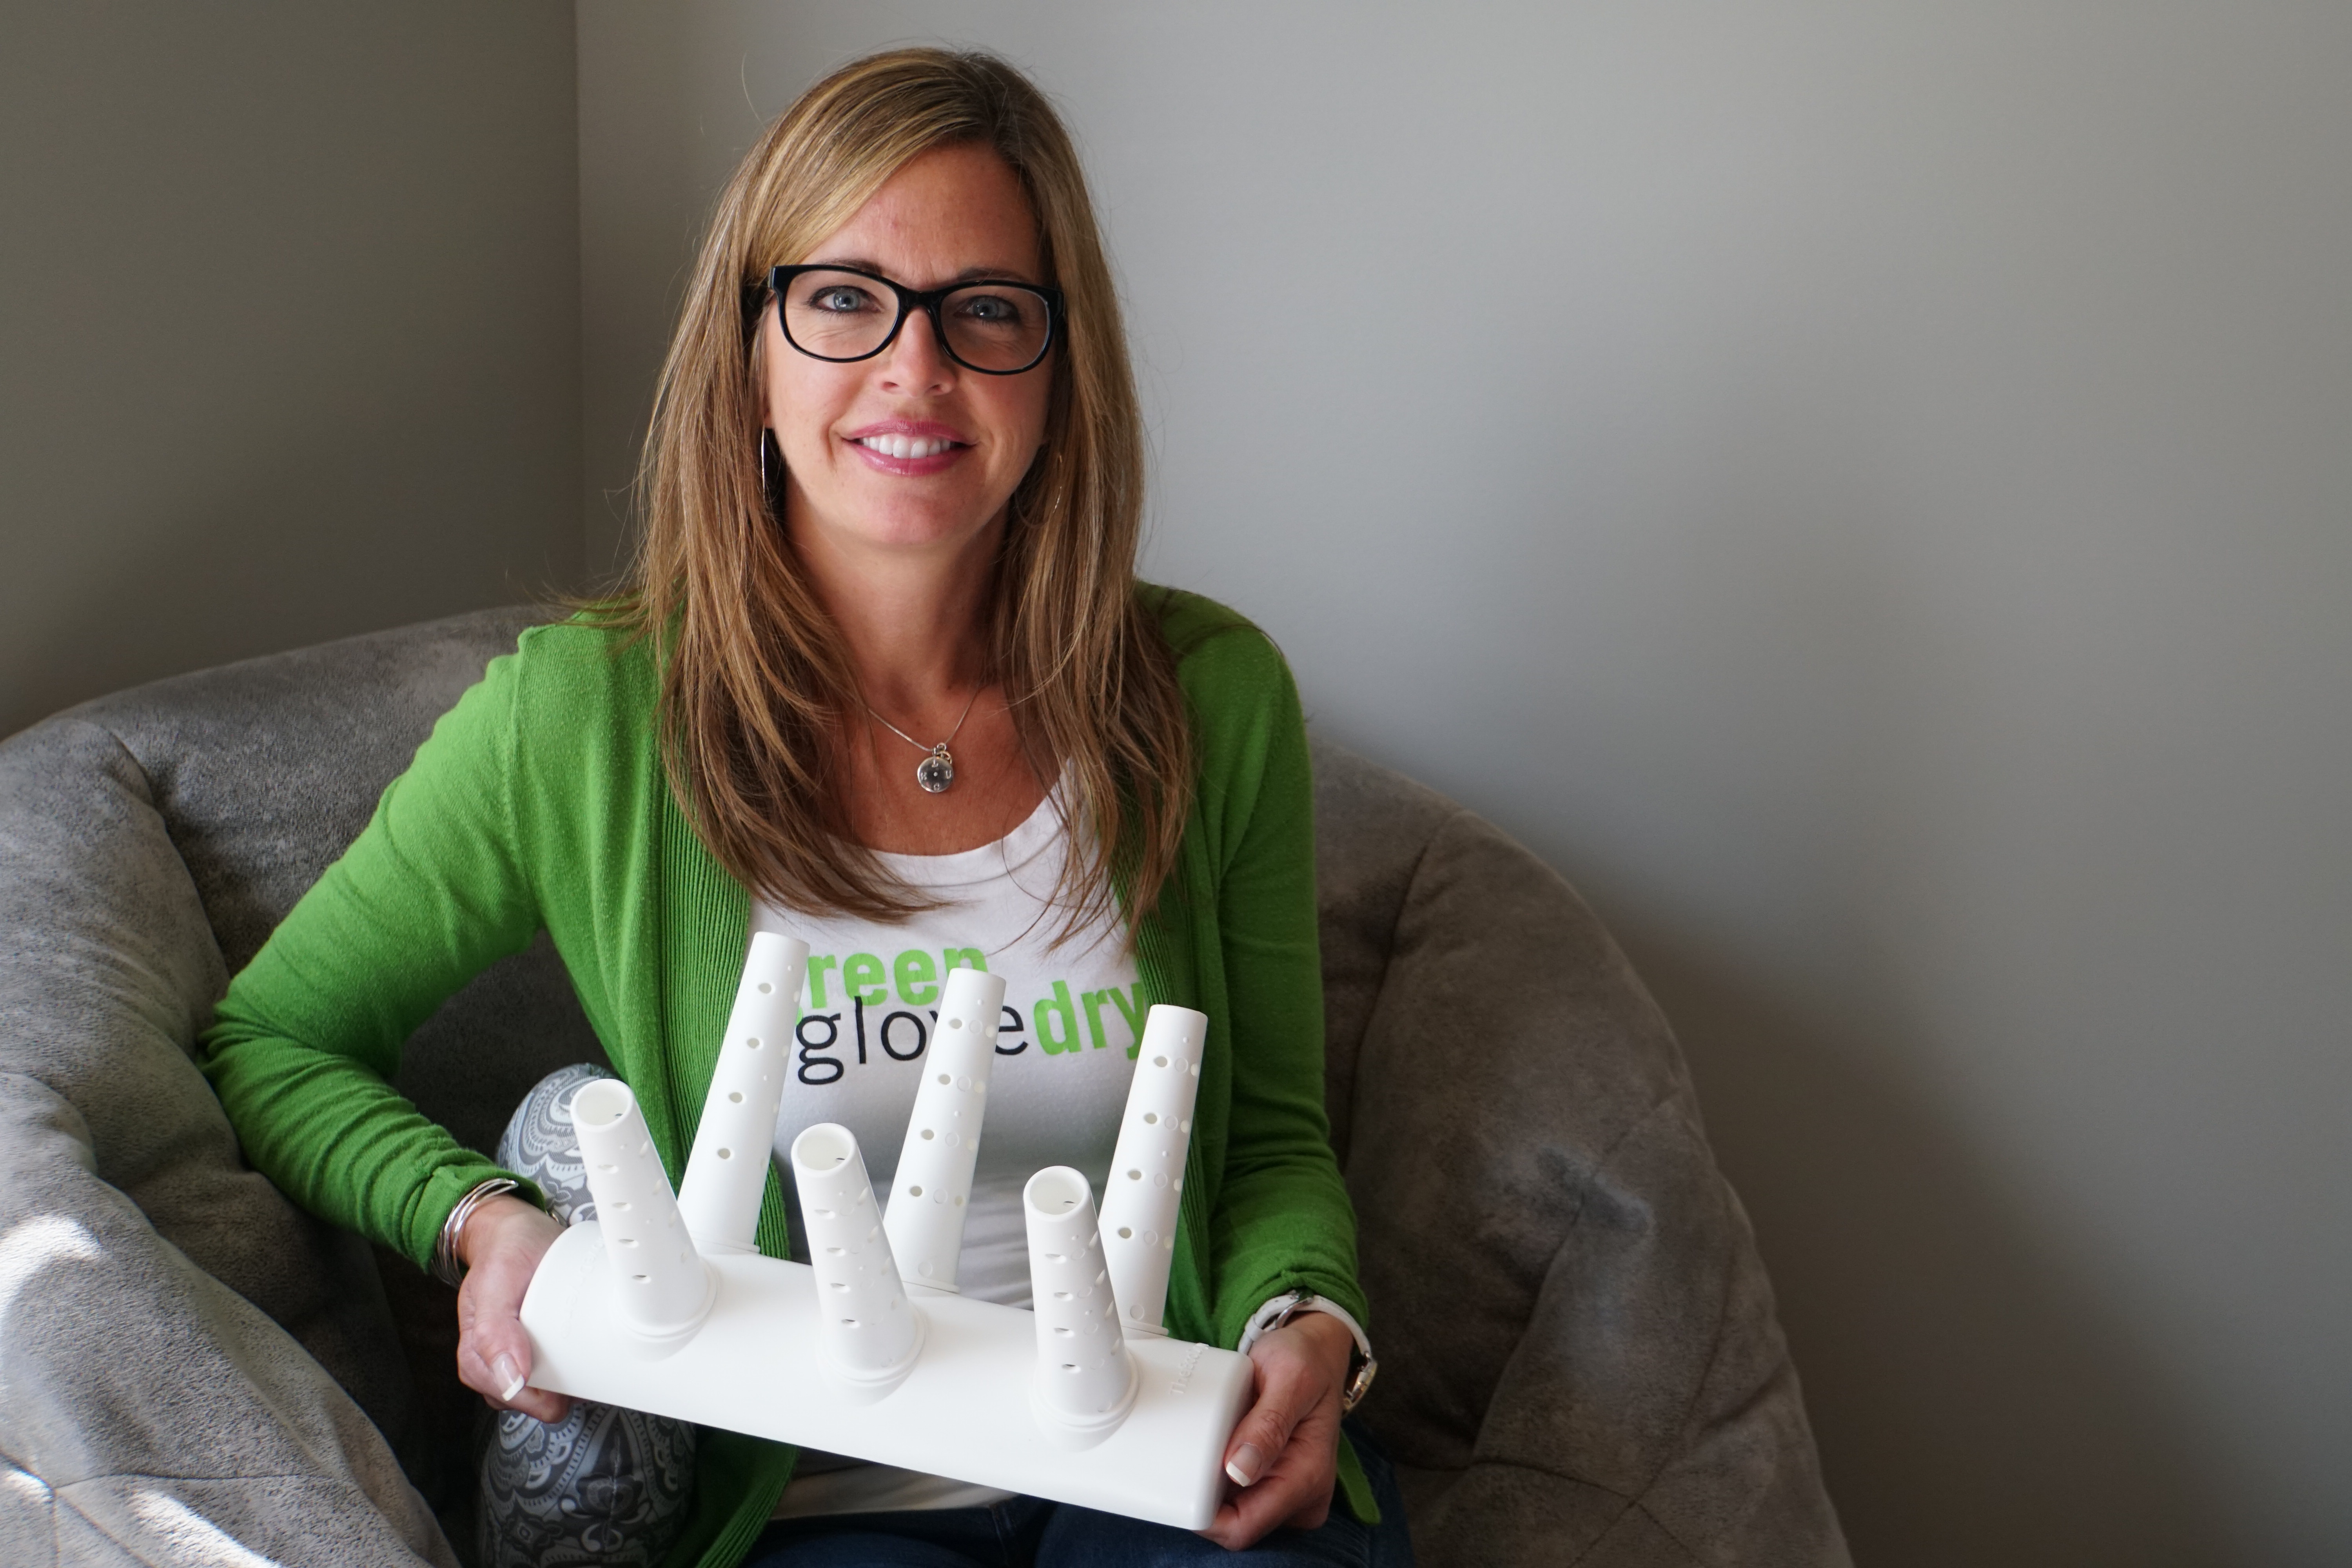 Karen Smoots, founder of the Green Glove Dryer